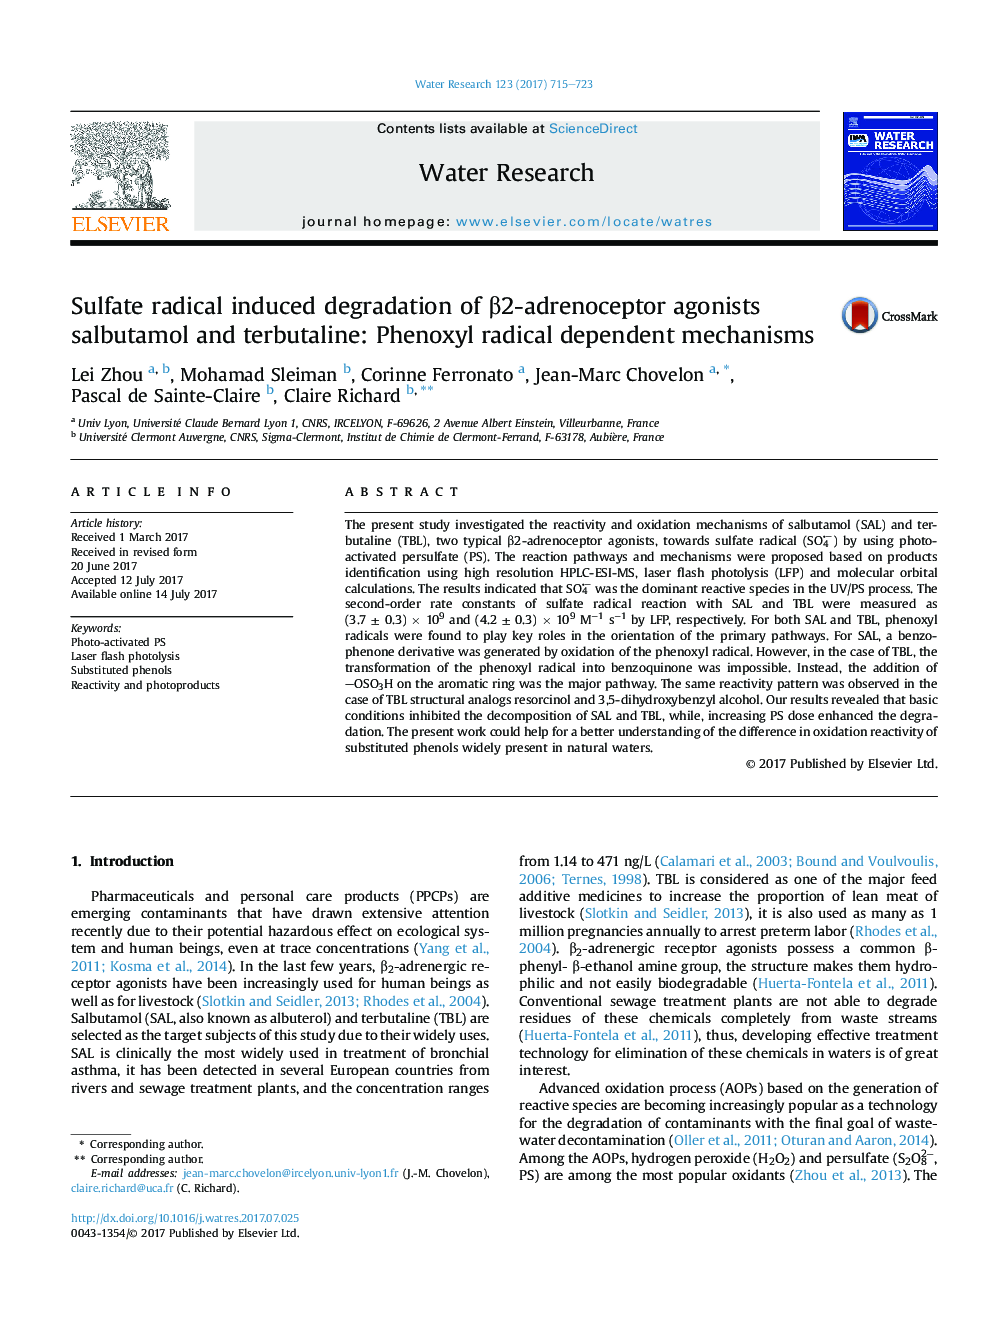 Sulfate radical induced degradation of Î²2-adrenoceptor agonists salbutamol and terbutaline: Phenoxyl radical dependent mechanisms